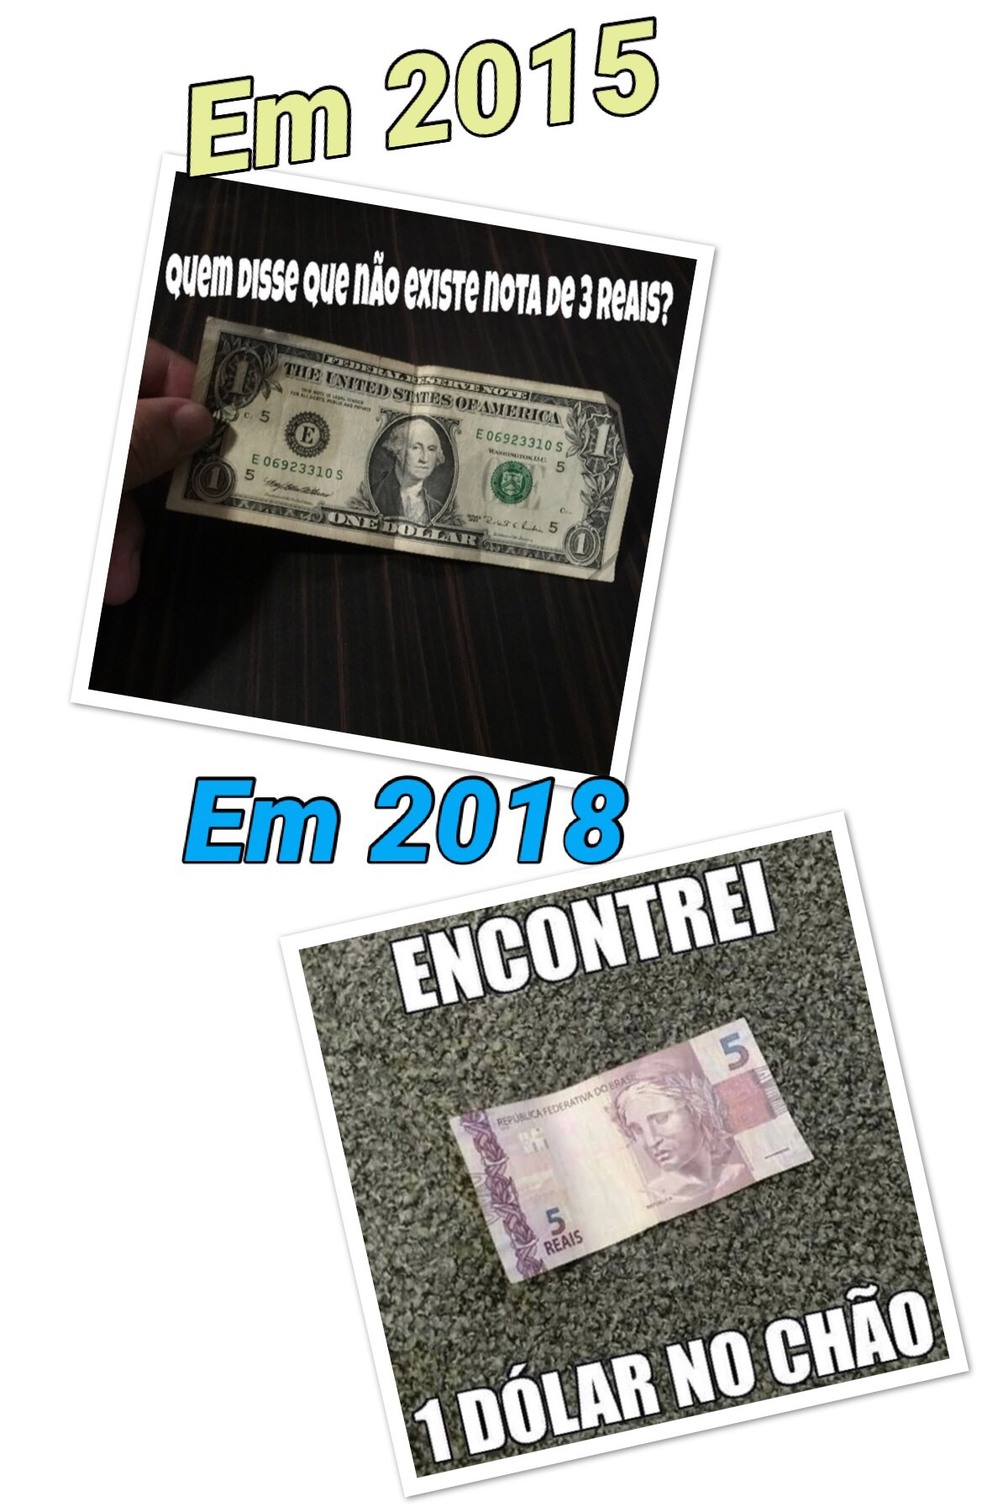 2018 > 2015 - meme